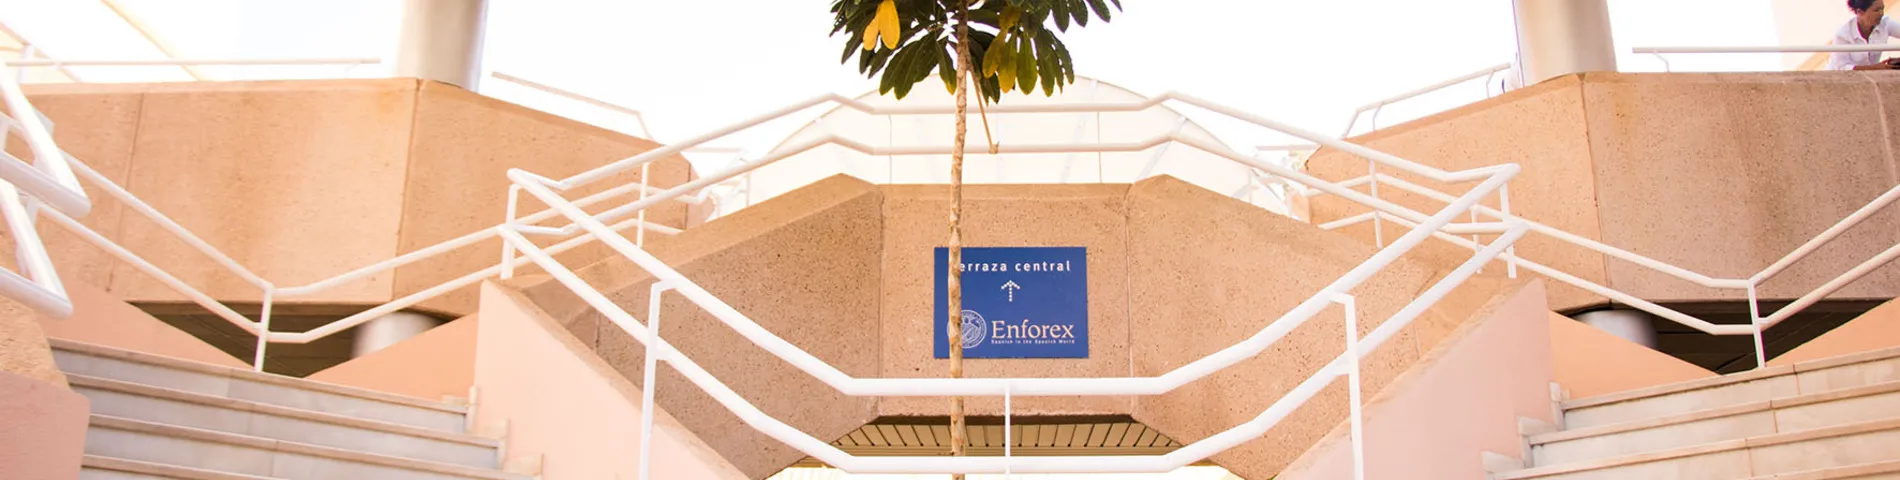 Enforex International Summer Centre - Centro obrazek 1